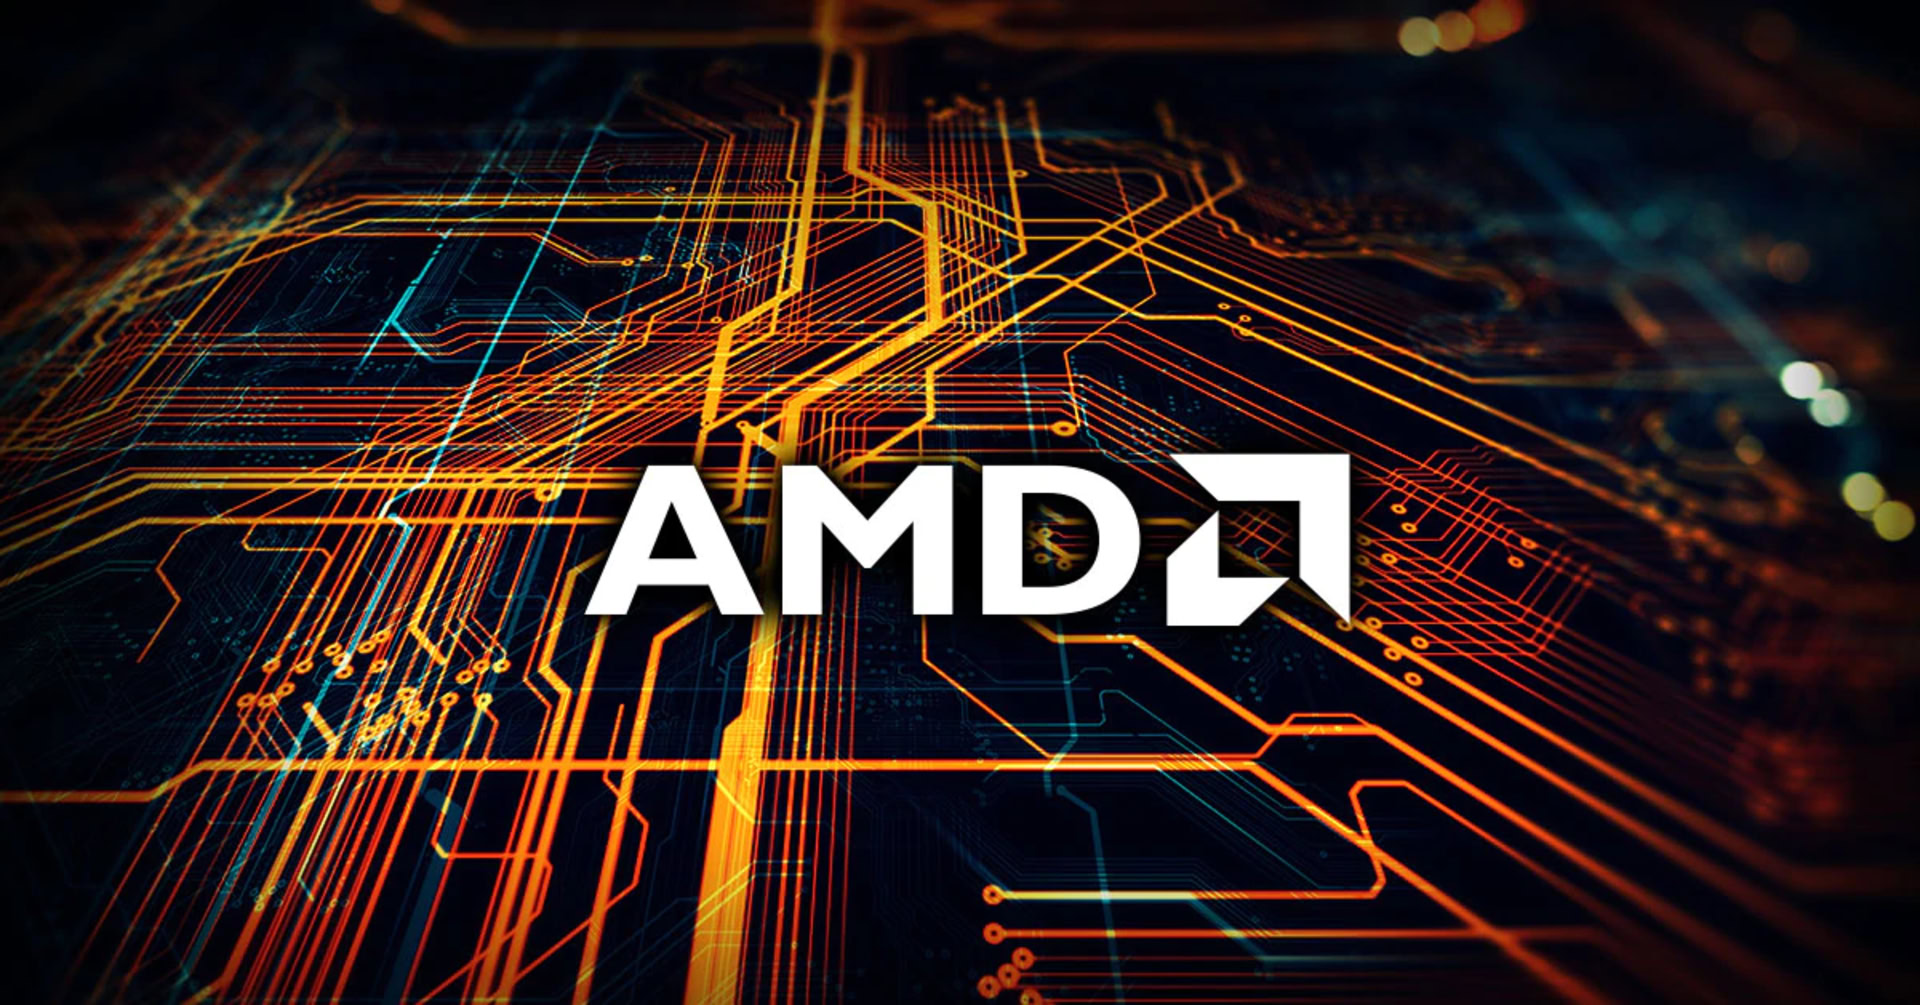 AMD processor logo on circuit background